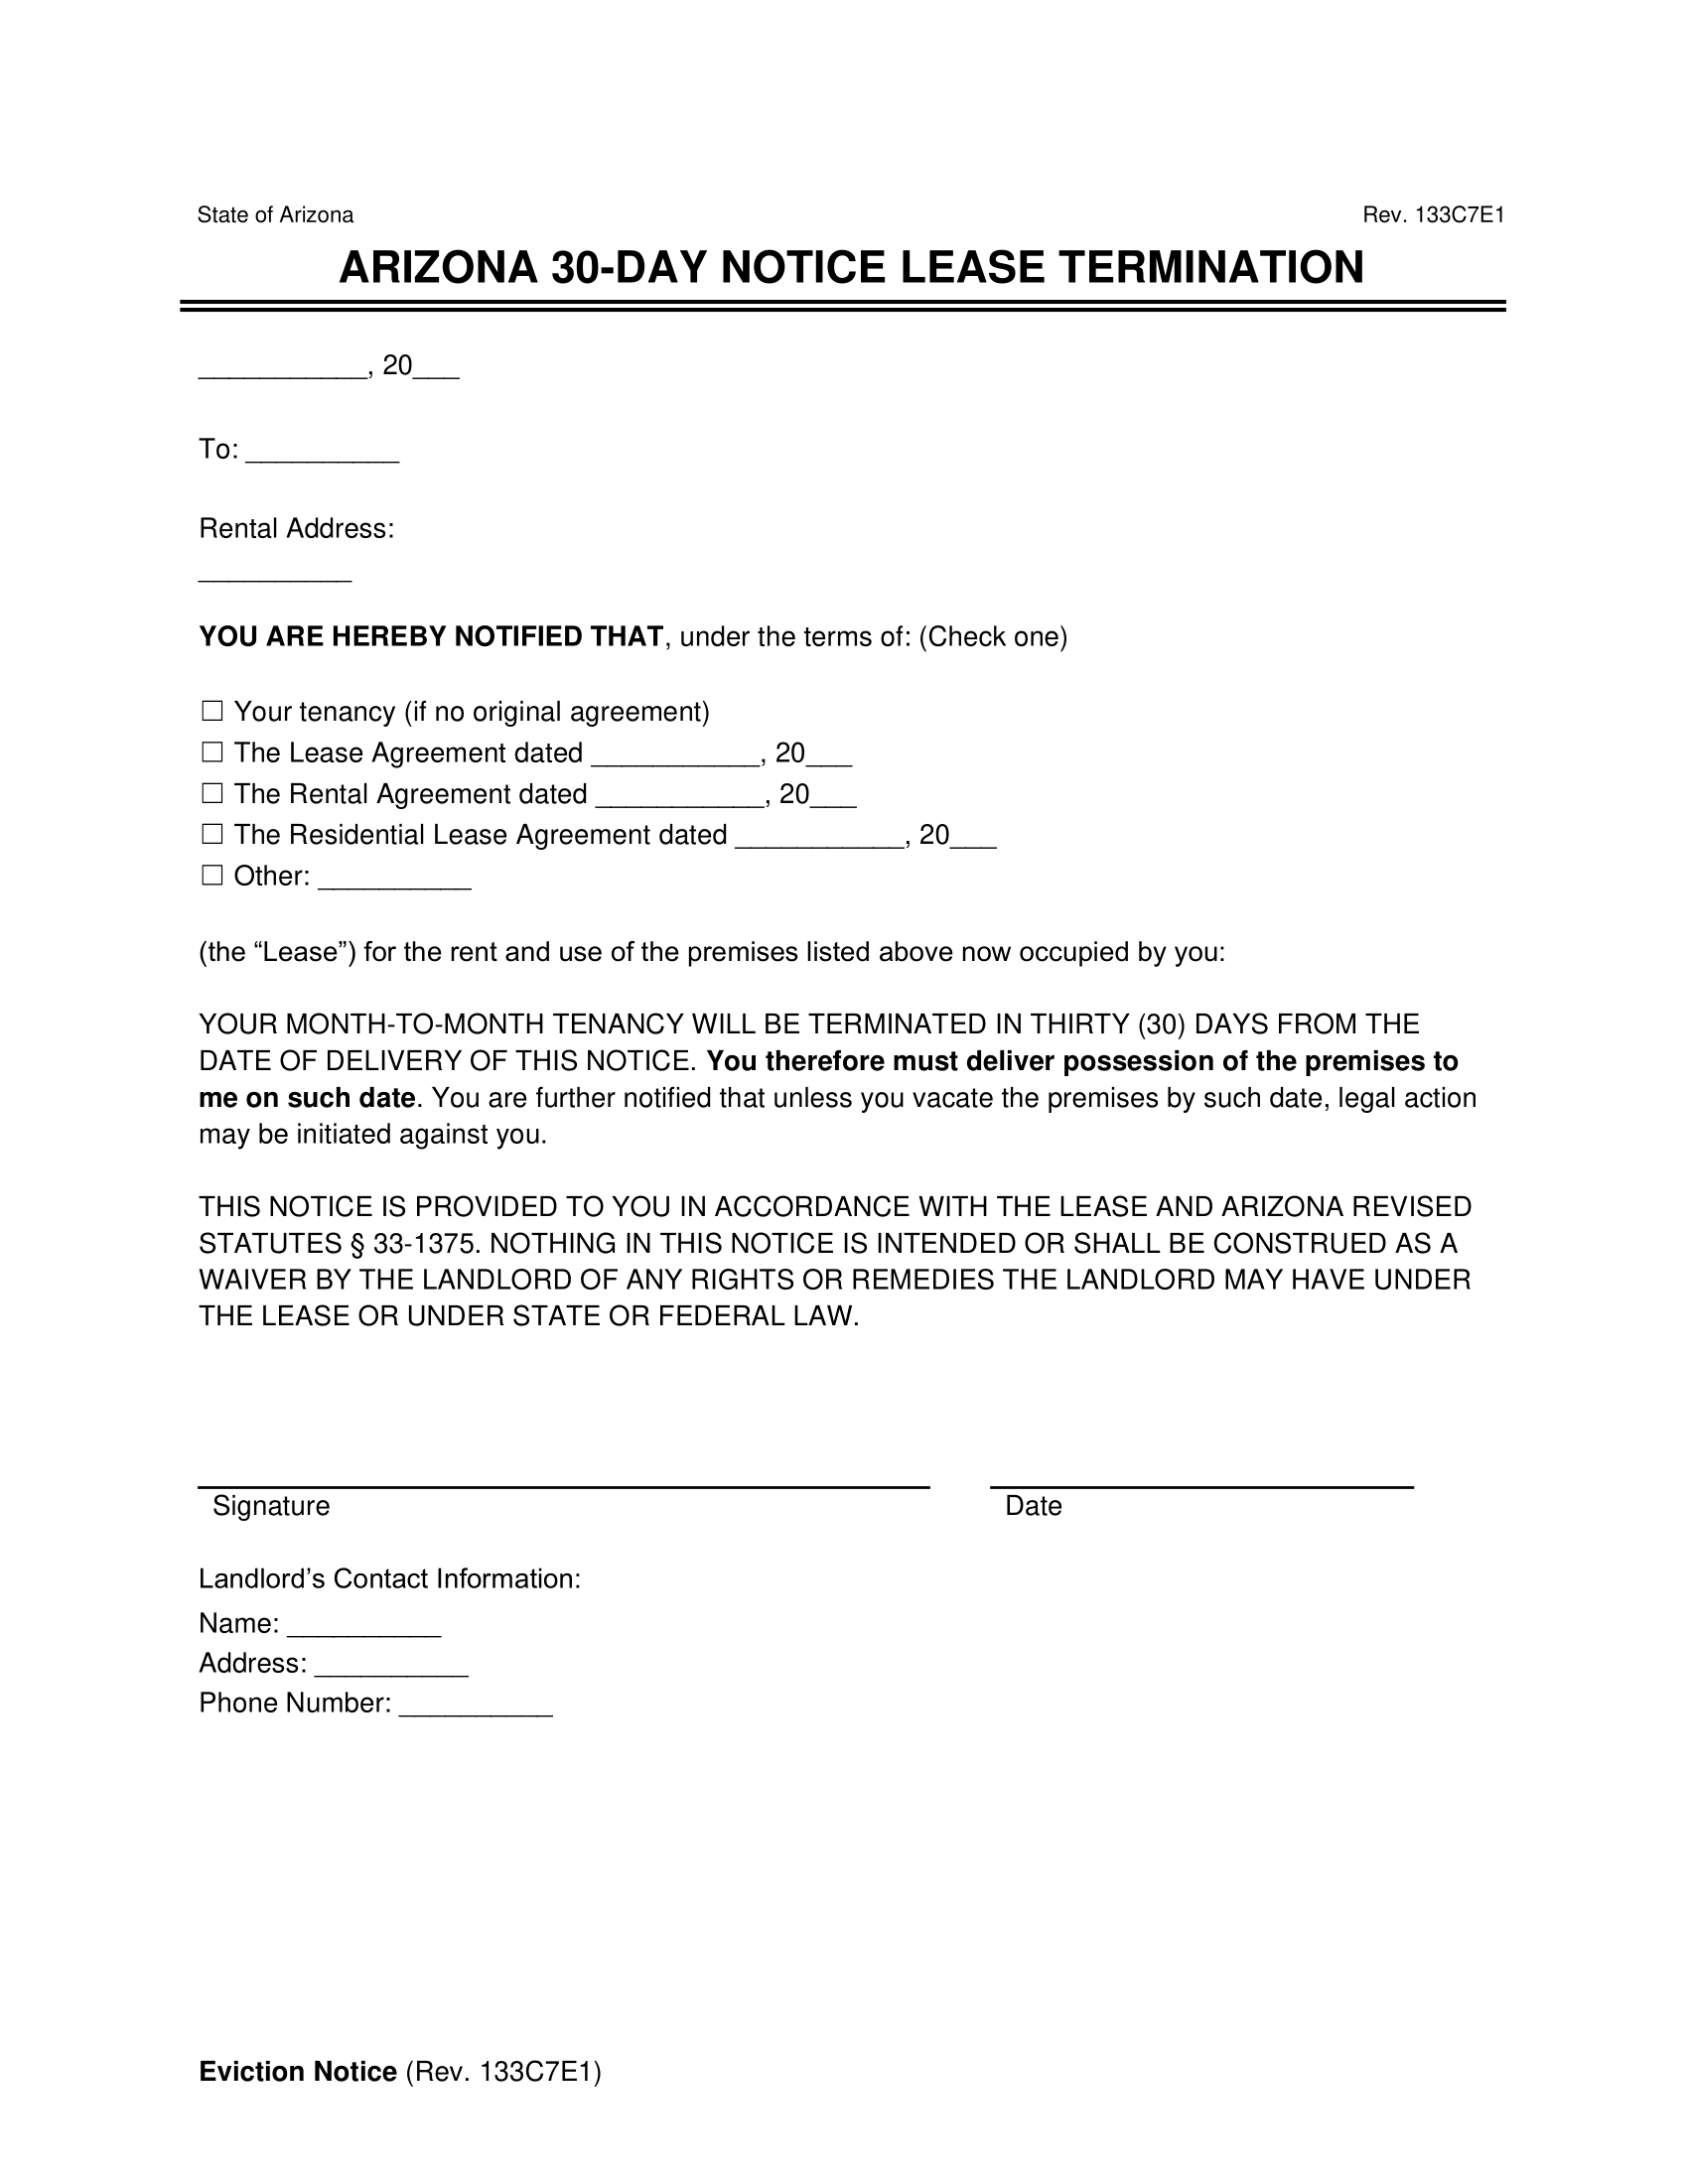 Arizona 30-Day Notice Lease Termination